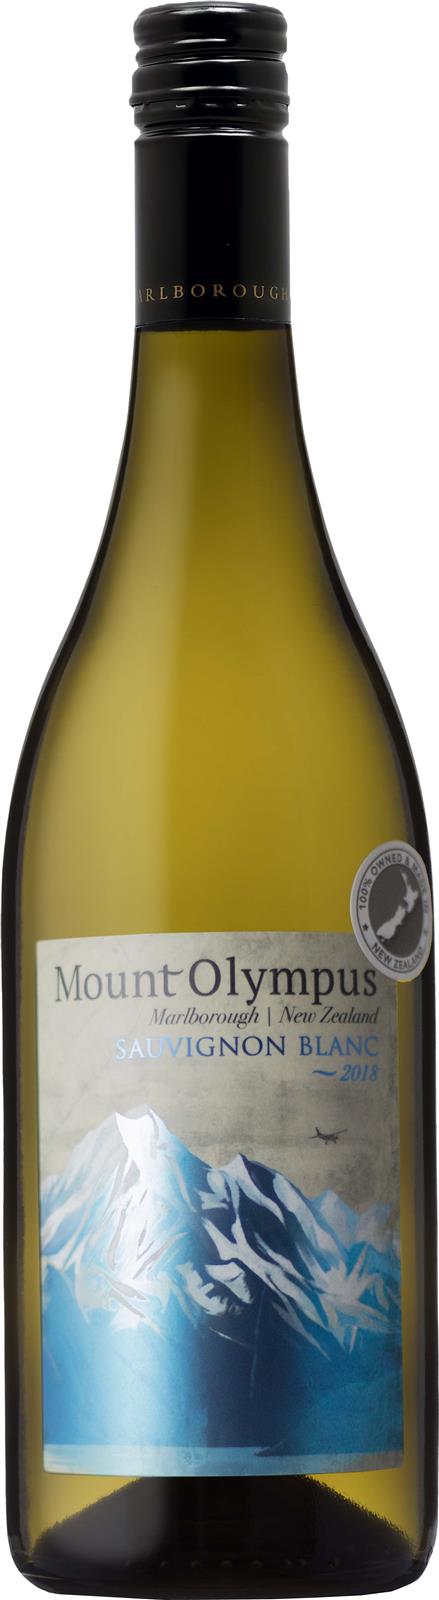 Mount Olympus Marlborough Sauvignon Blanc 2018